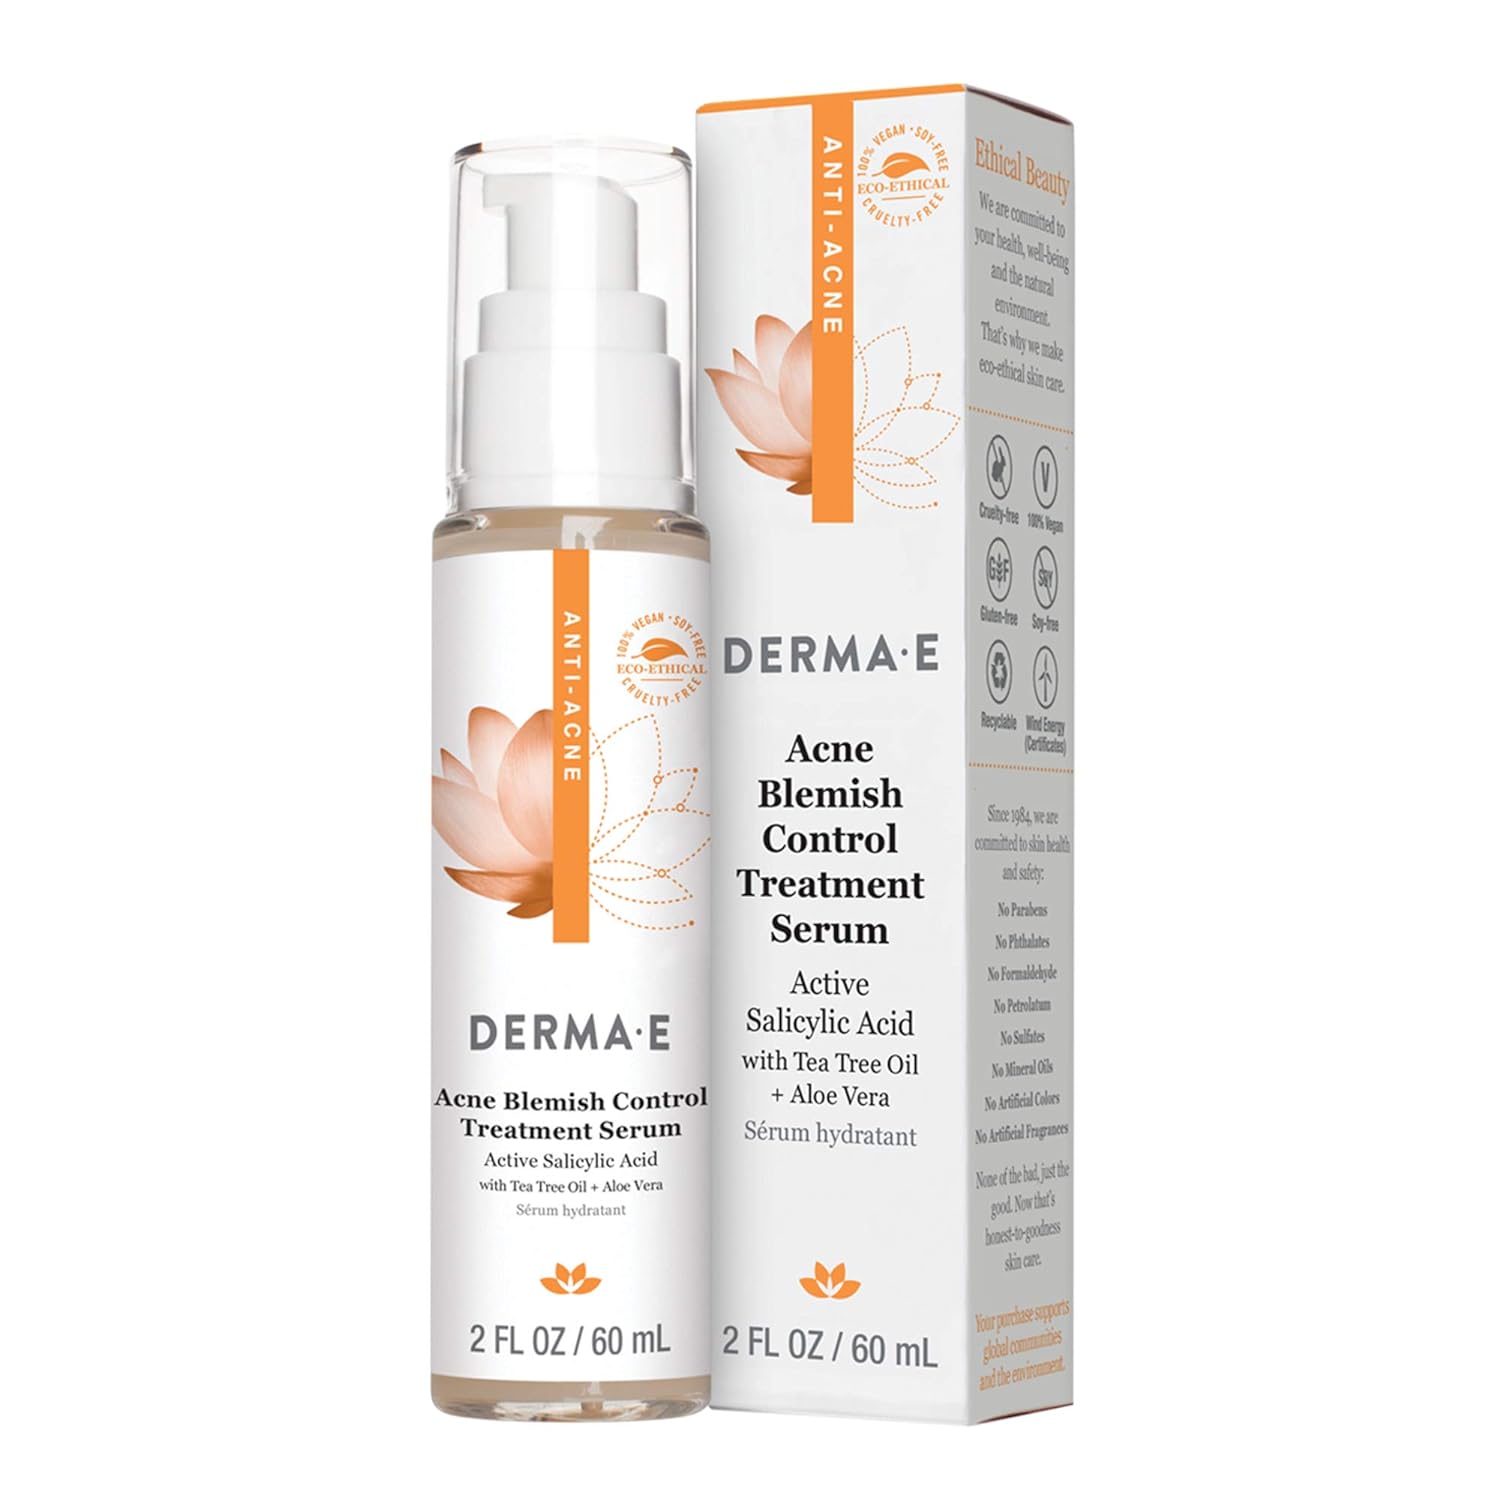 DERMA E Acne Blemish Control Treatment Serum – Active Salicylic Acid Serum for Face – Pore-Cleaning Anti-Blemish and Blackhead Treatment for Blemish-Prone Skin, 2 fl oz